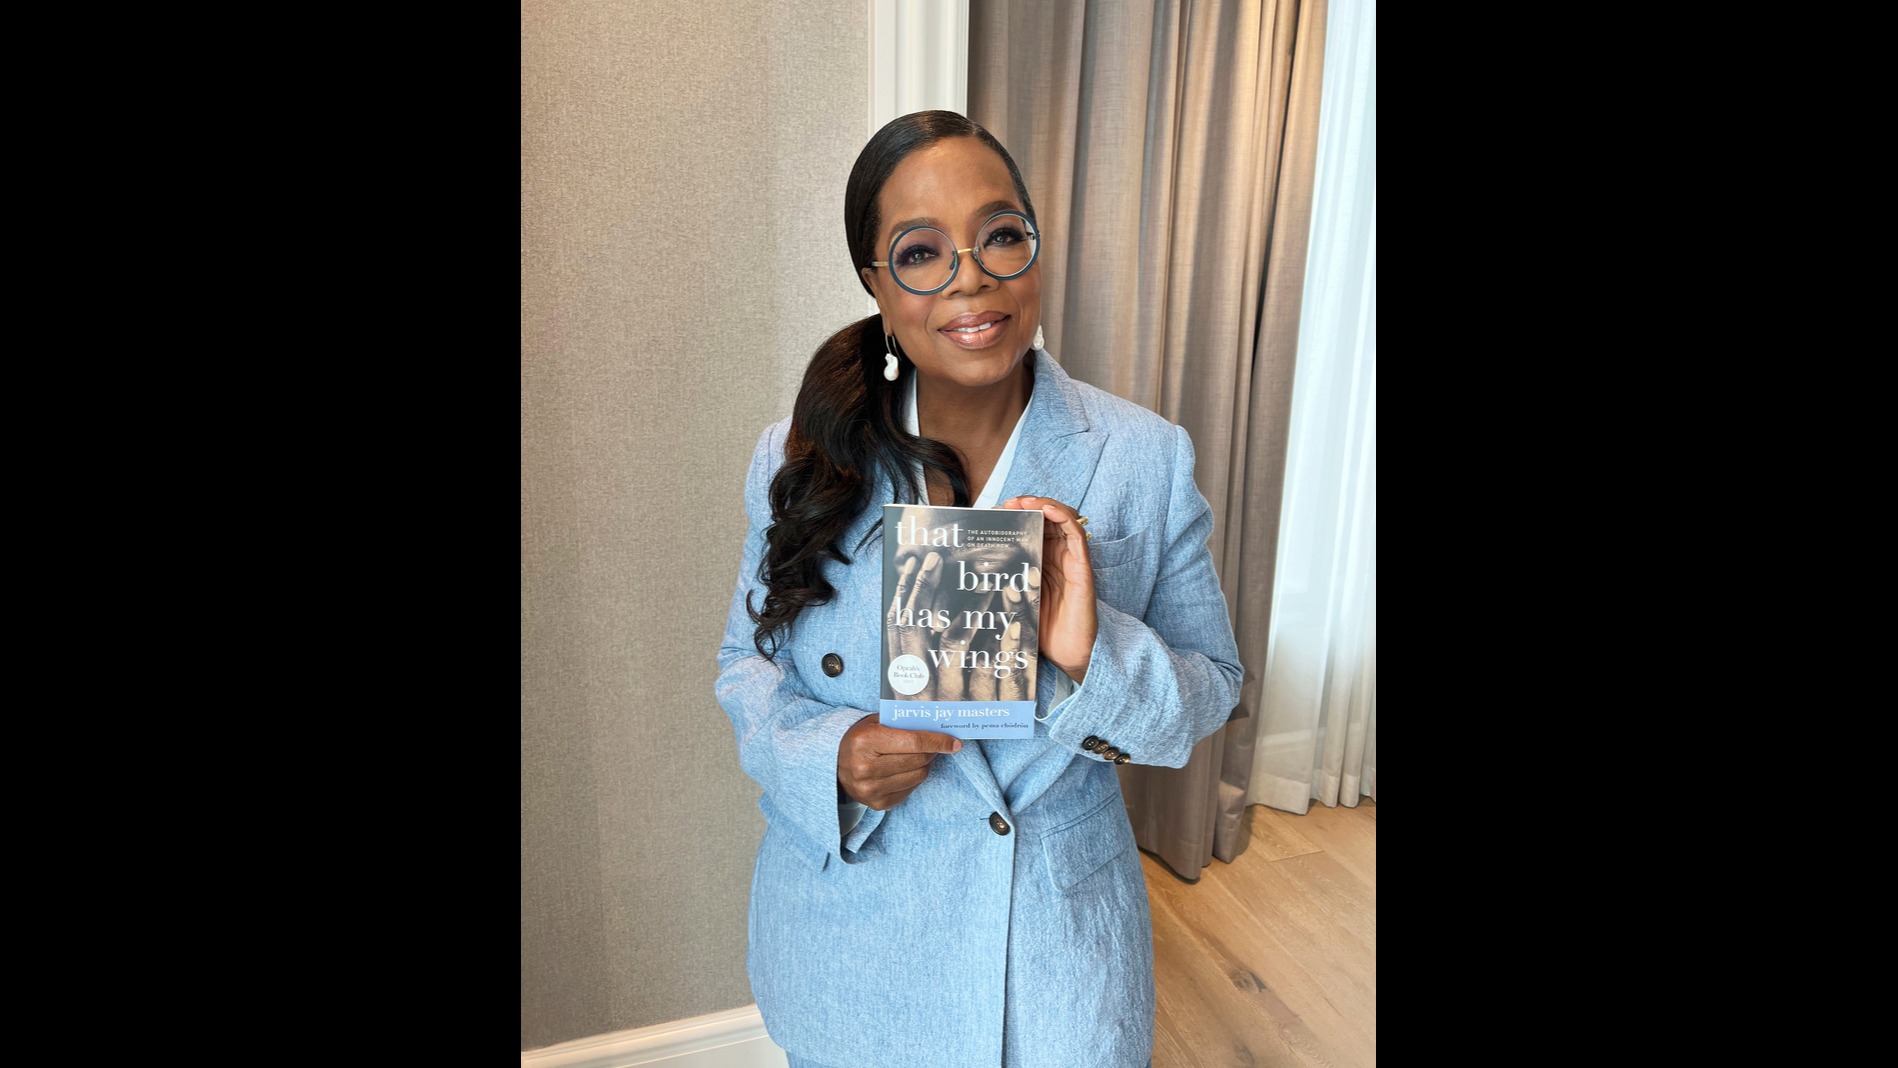 Oprah's New Book Club Pick: 'That Bird Has My Wings'